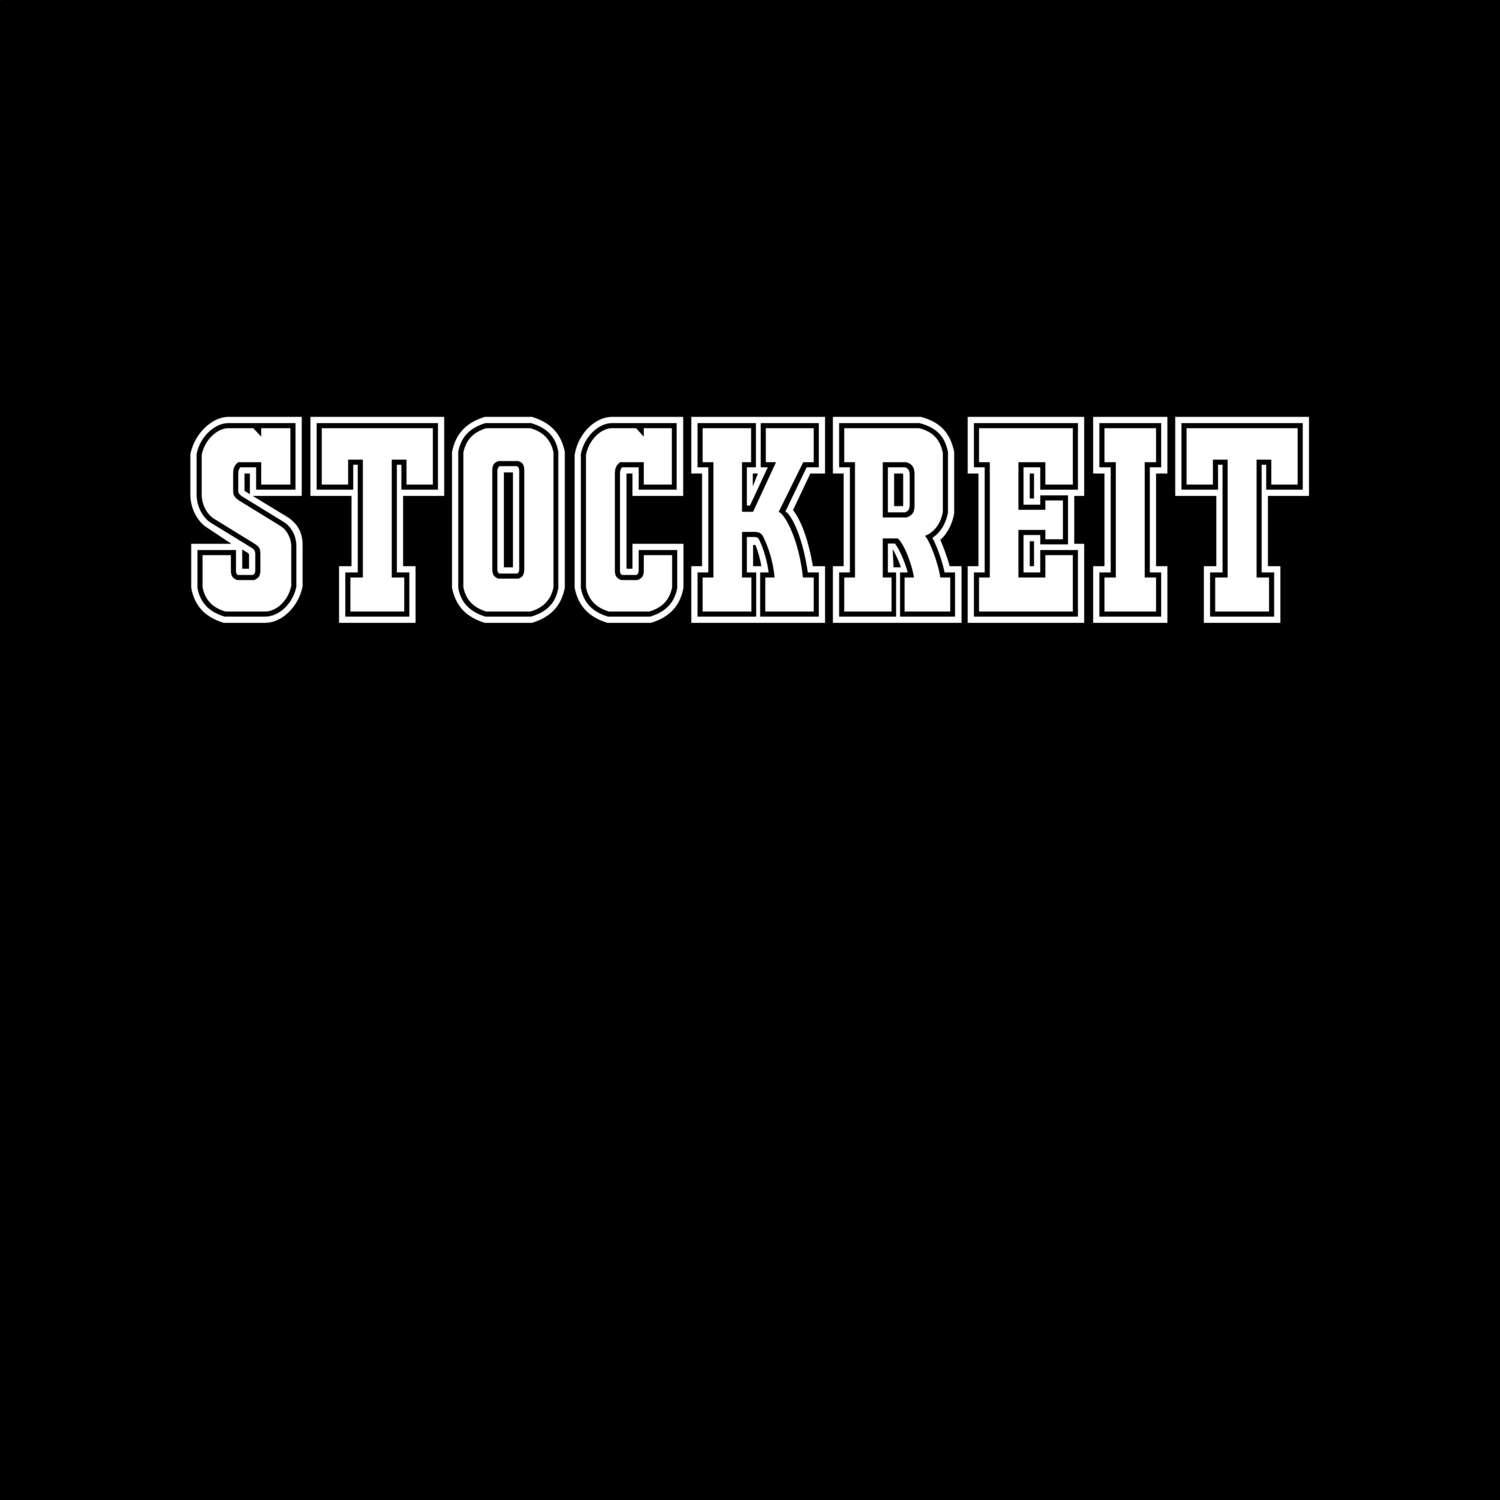 Stockreit T-Shirt »Classic«